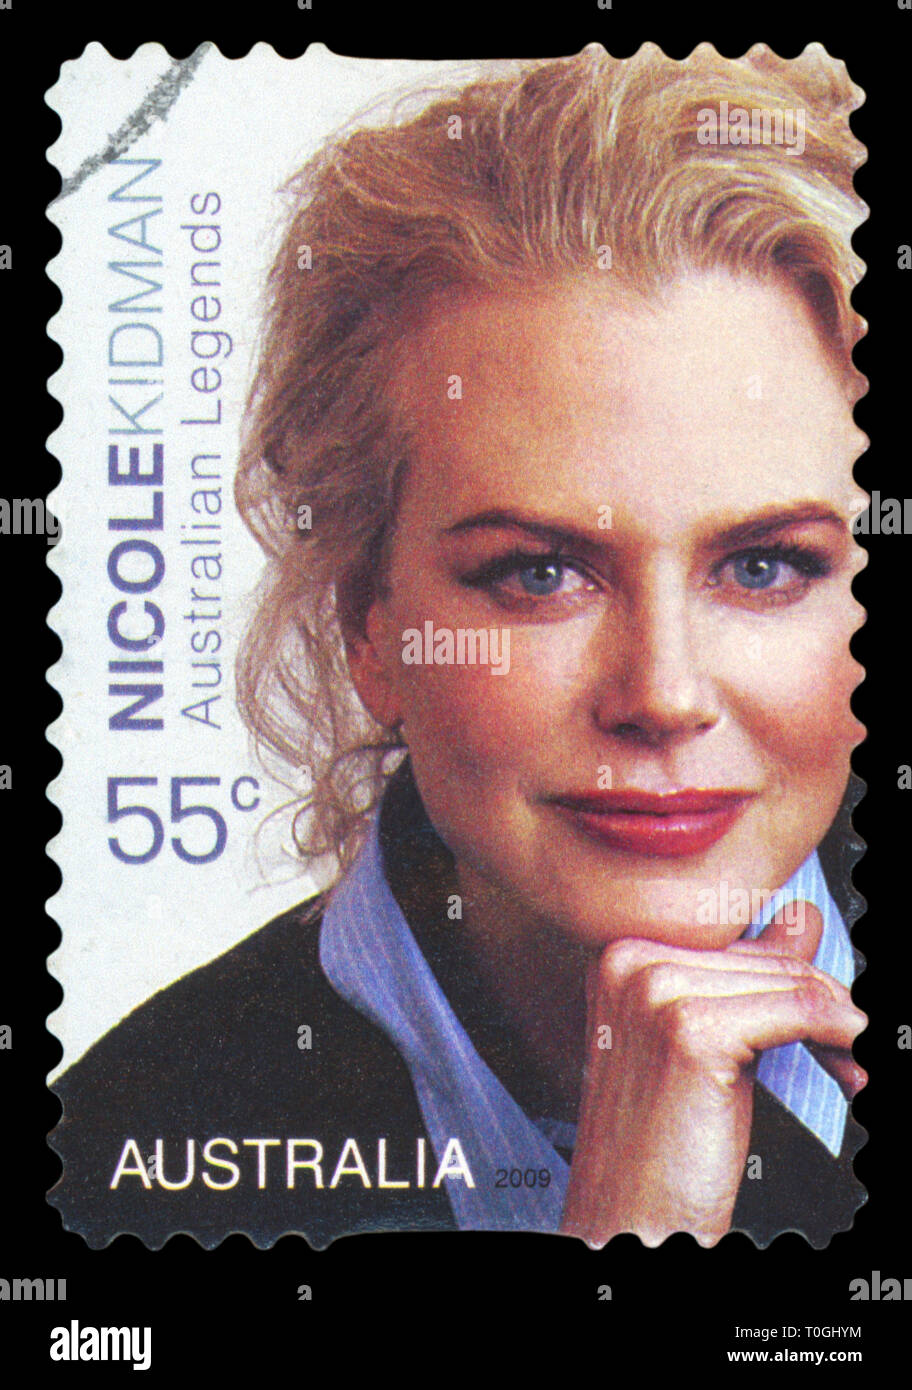 AUSTRALIA - CIRCA 2009: a postage stamp printed in Australia showing an image of actress Nicole Kidman, circa 2009. Stock Photo